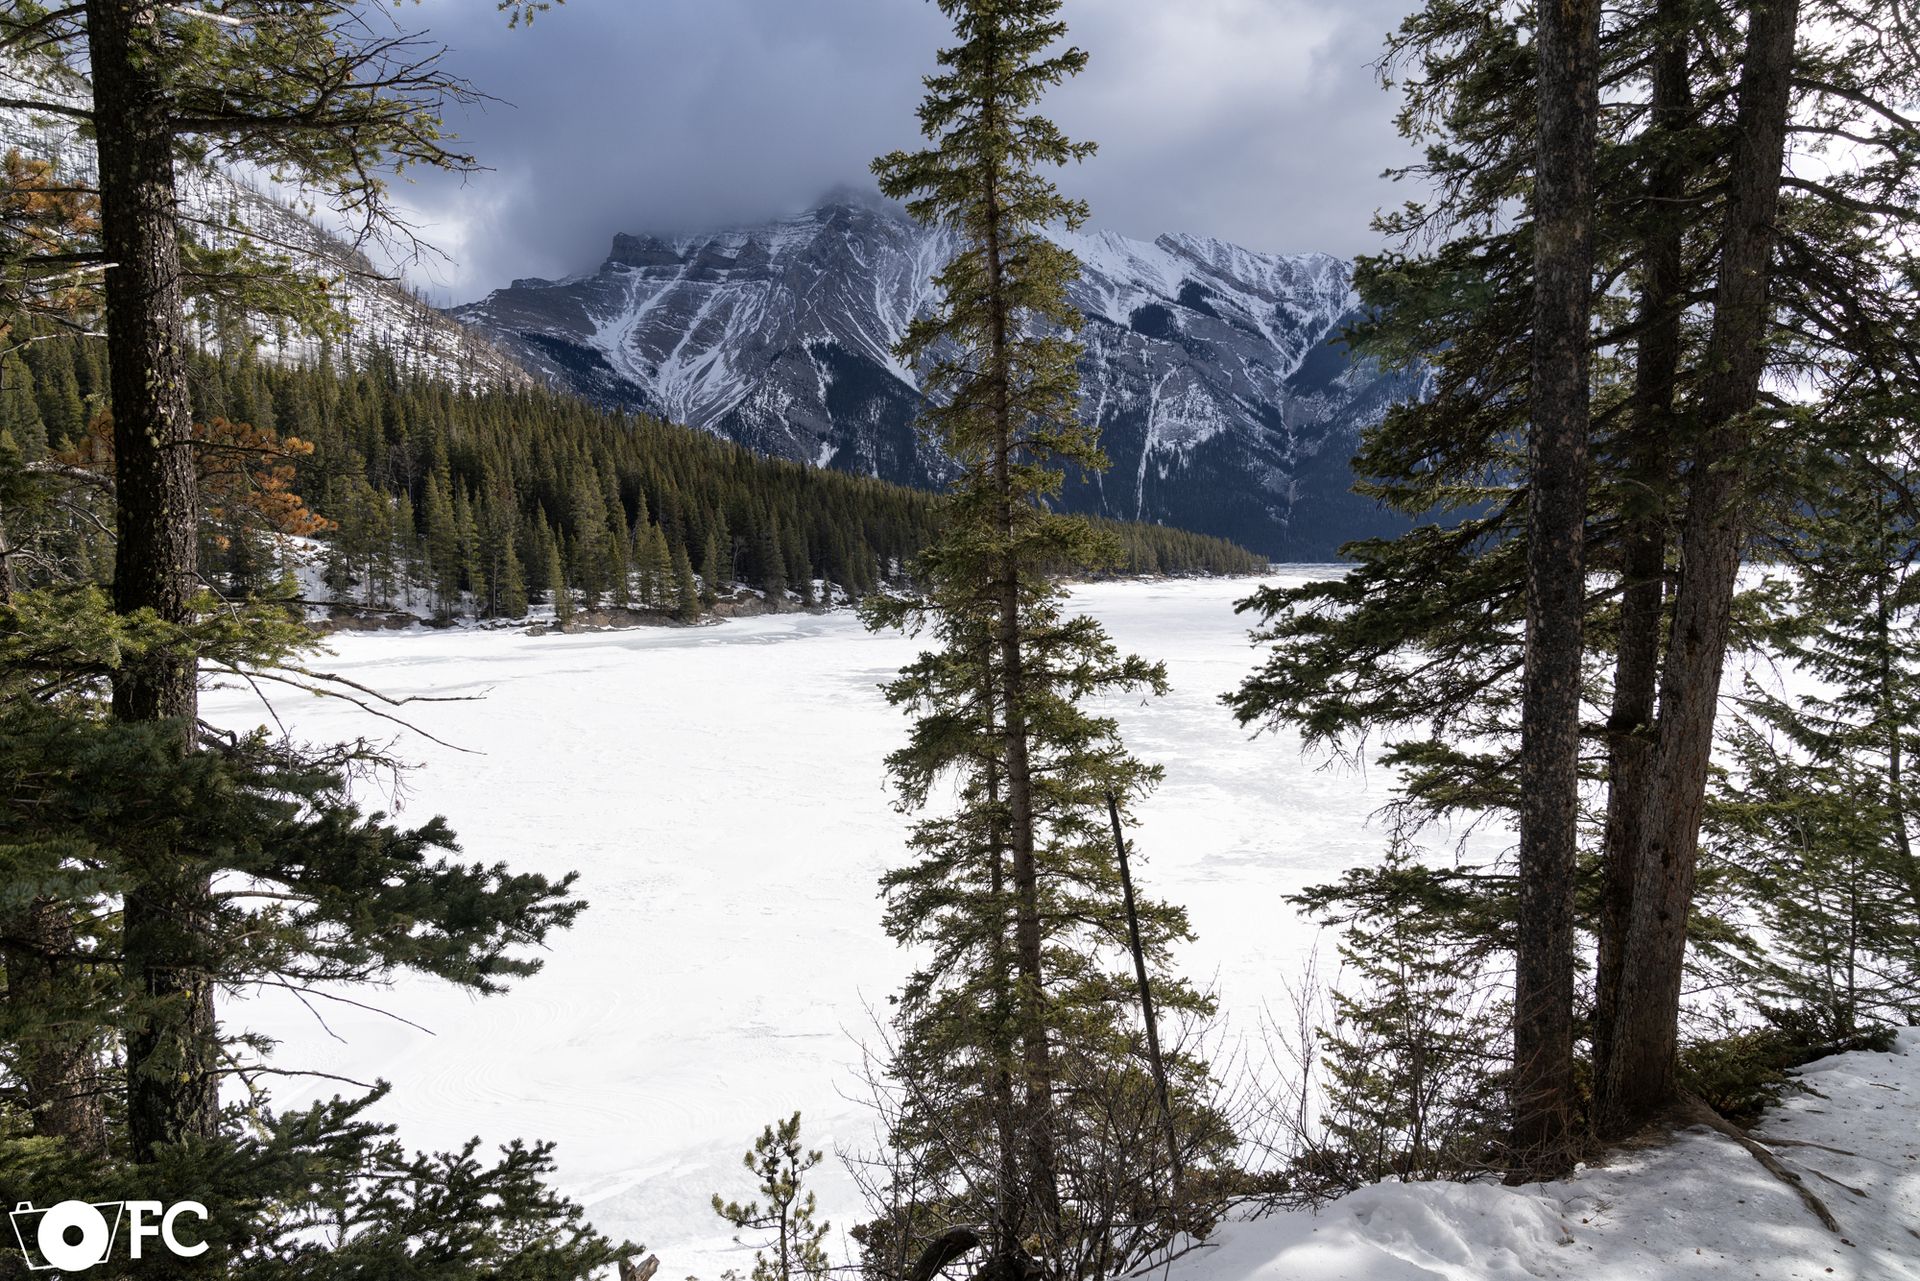 CANADA BY CANARY SNOW TEAM